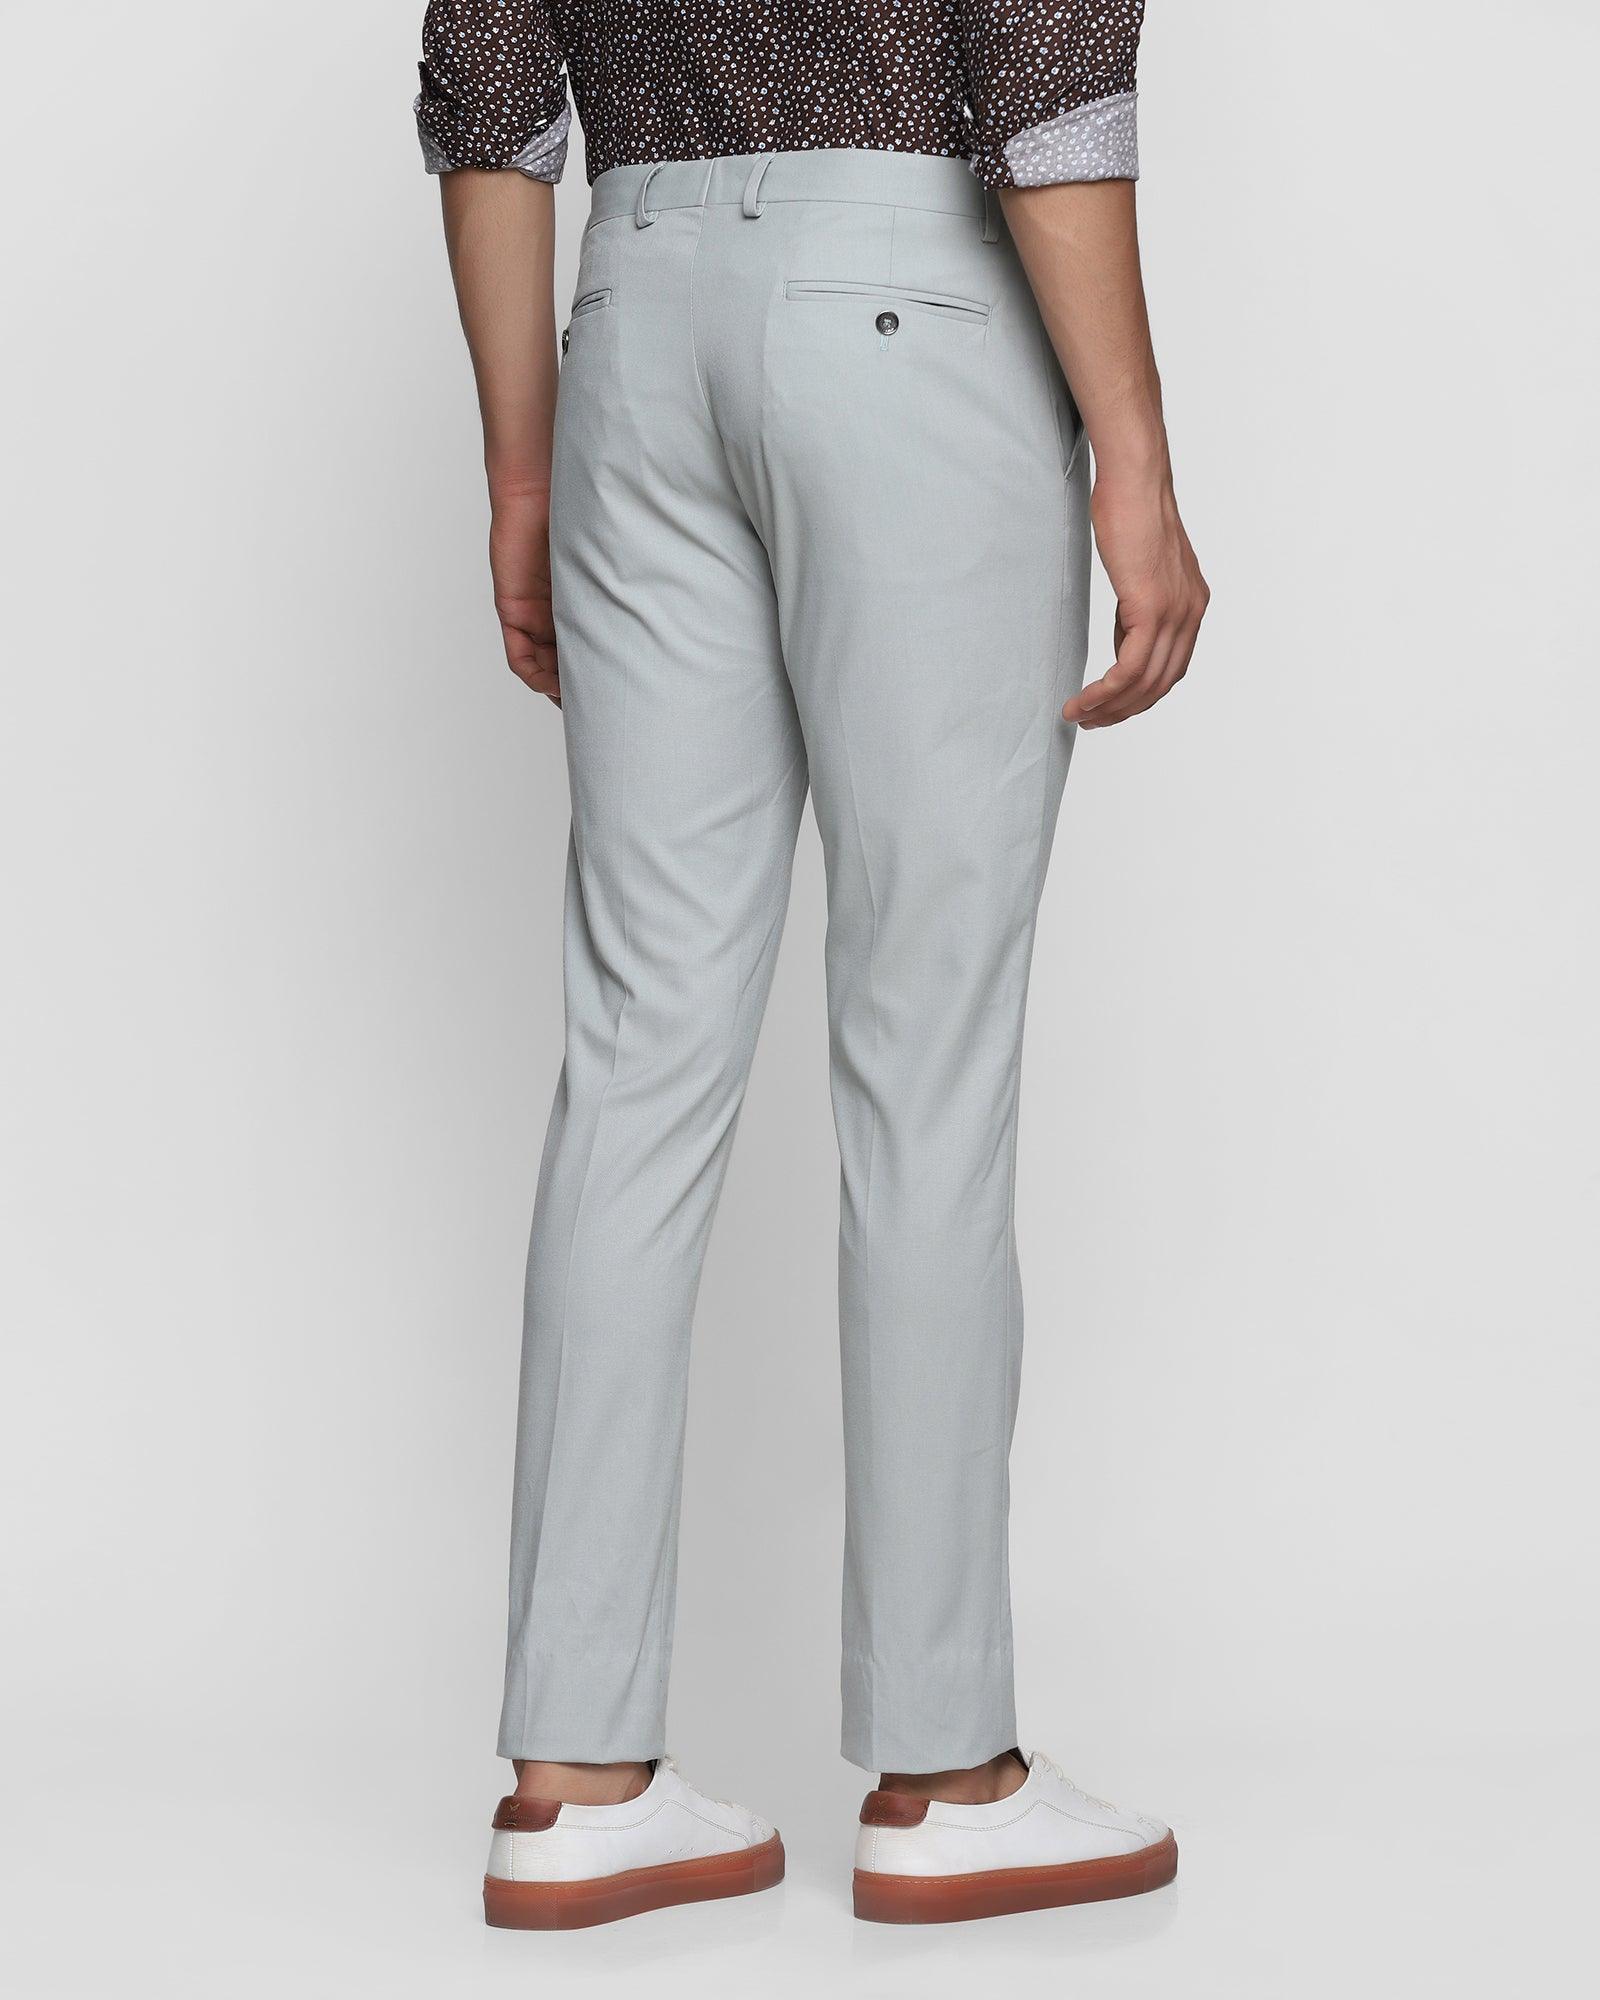 Slim Fit B-91 Formal Mint Textured Trouser - Aslo